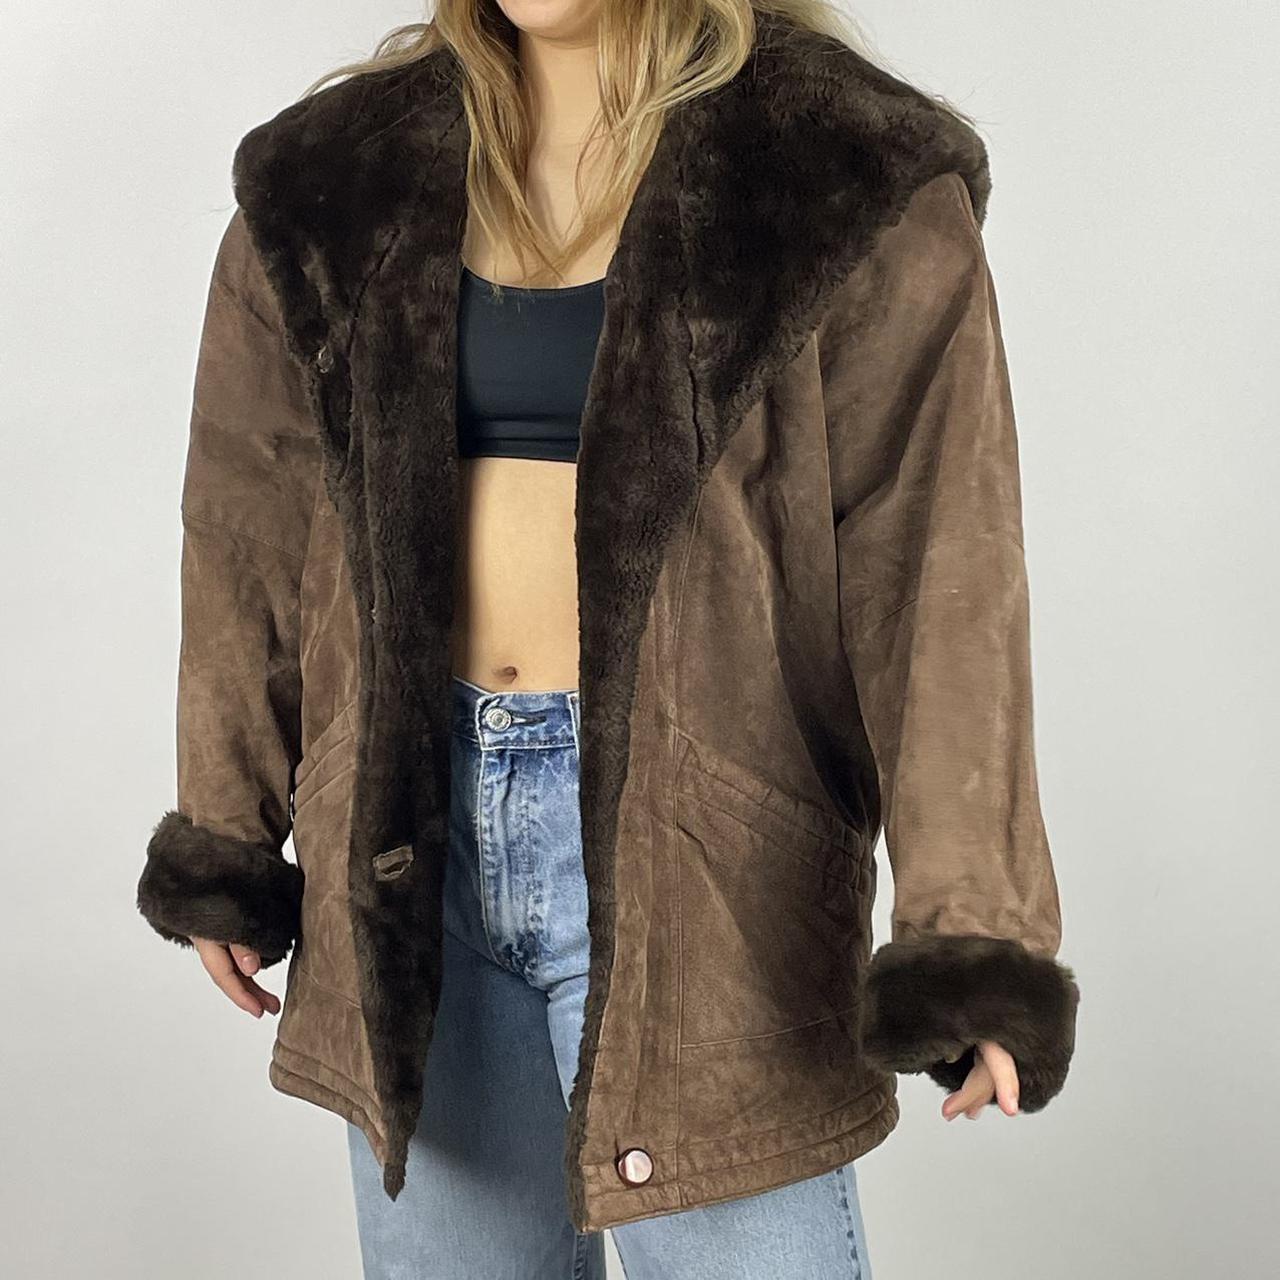 Product Image 2 - Vintage fur trim jacket .